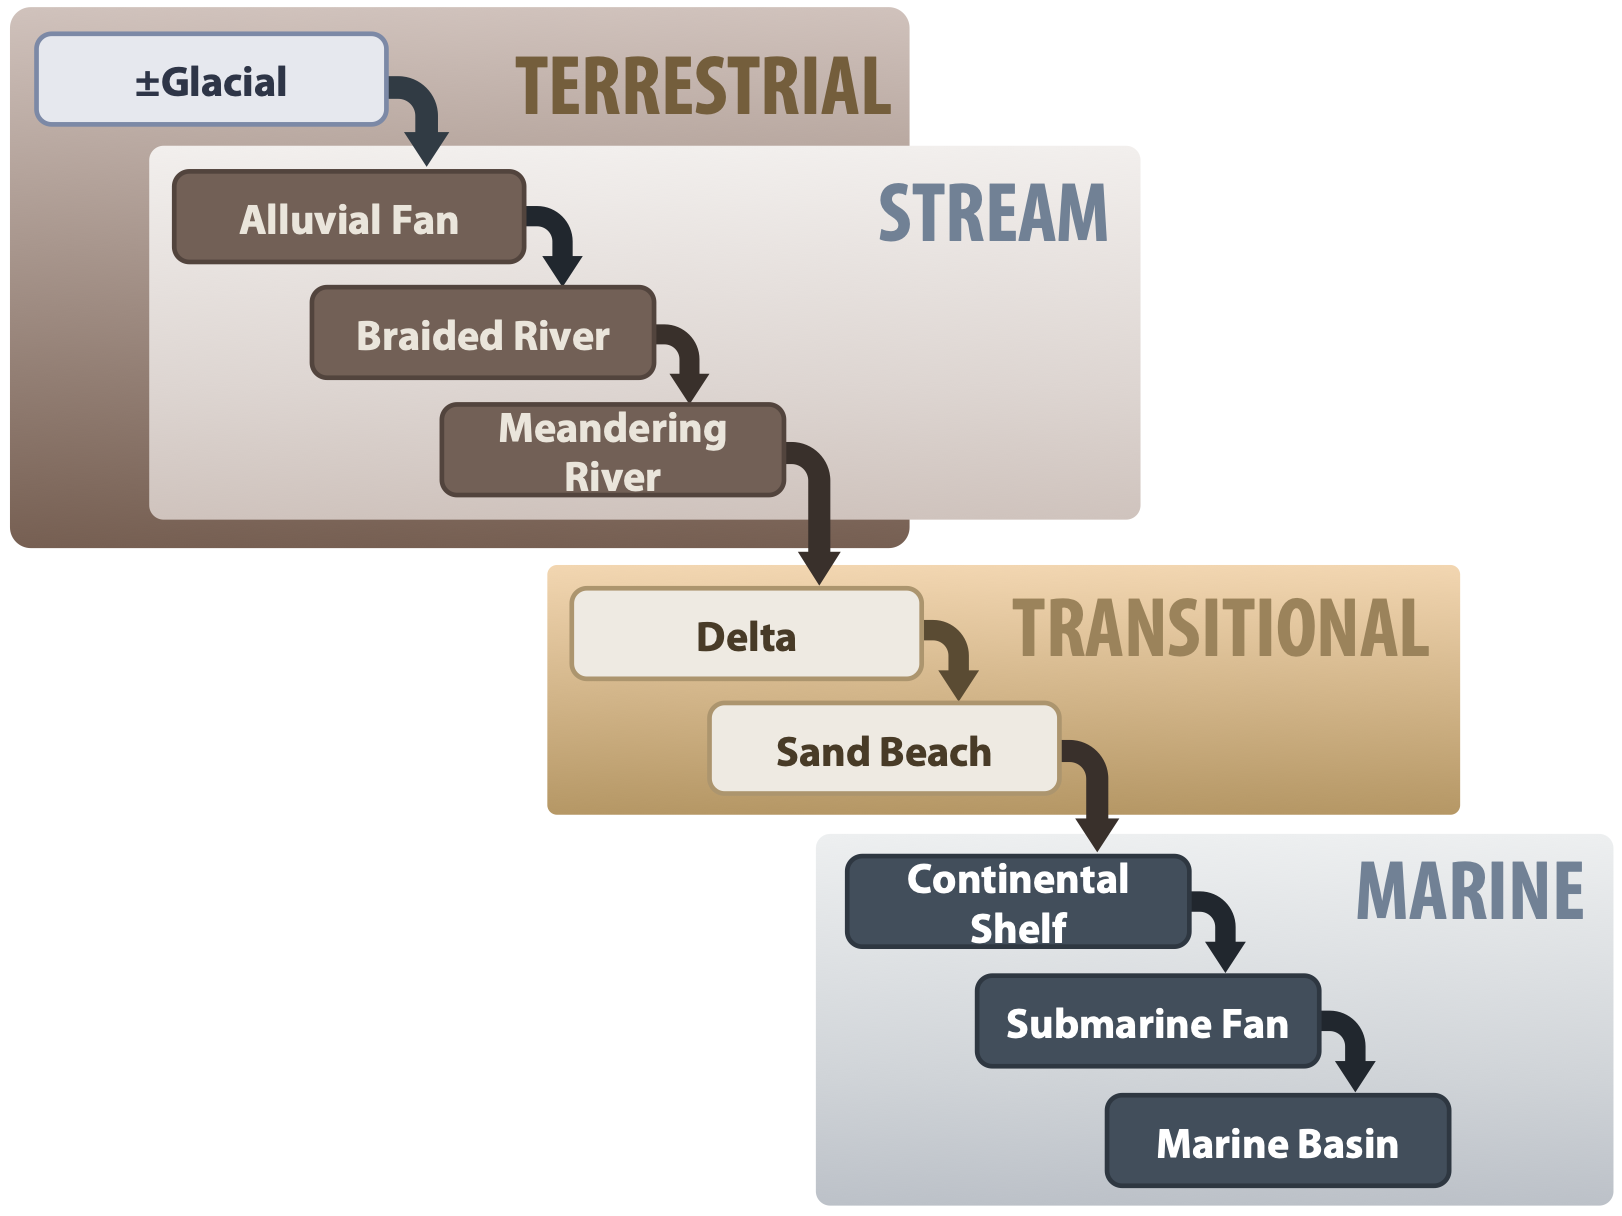 +/- (Glacial ↓) Alluvial Fan ↓ Braided River ↓ Meandering River ↓ Delta ↓ Sand Beach ↓ Continental Shelf ↓ Submarine Fan ↓ Marine Basin